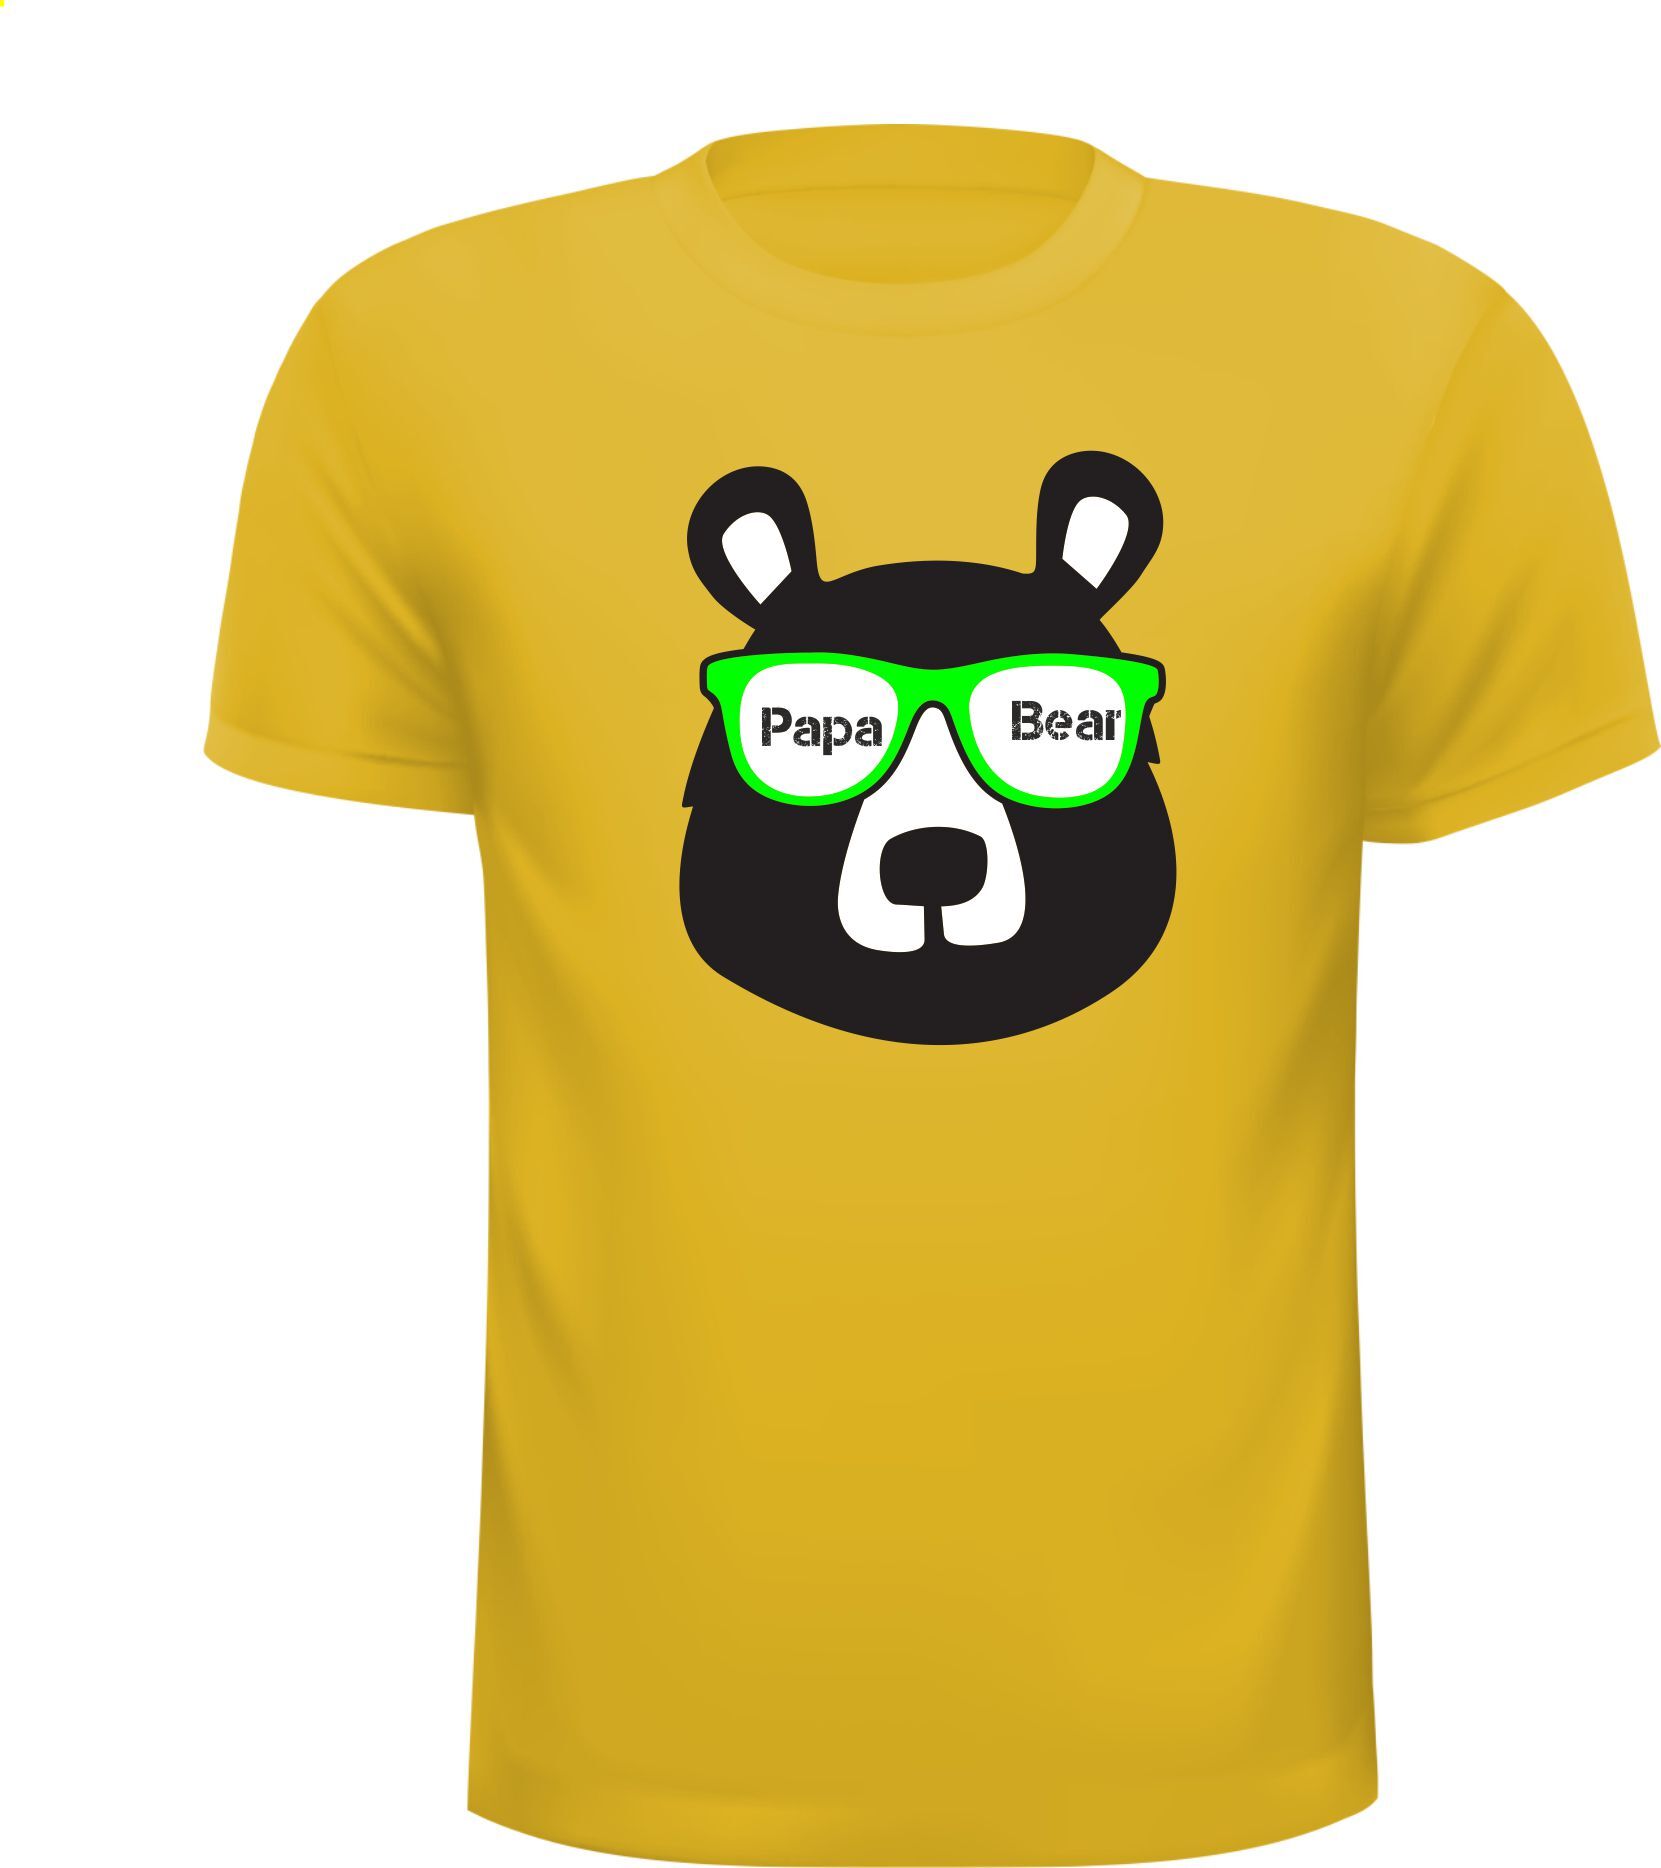 T-shirt voor je vader papa bear leuk voor Vaderdag